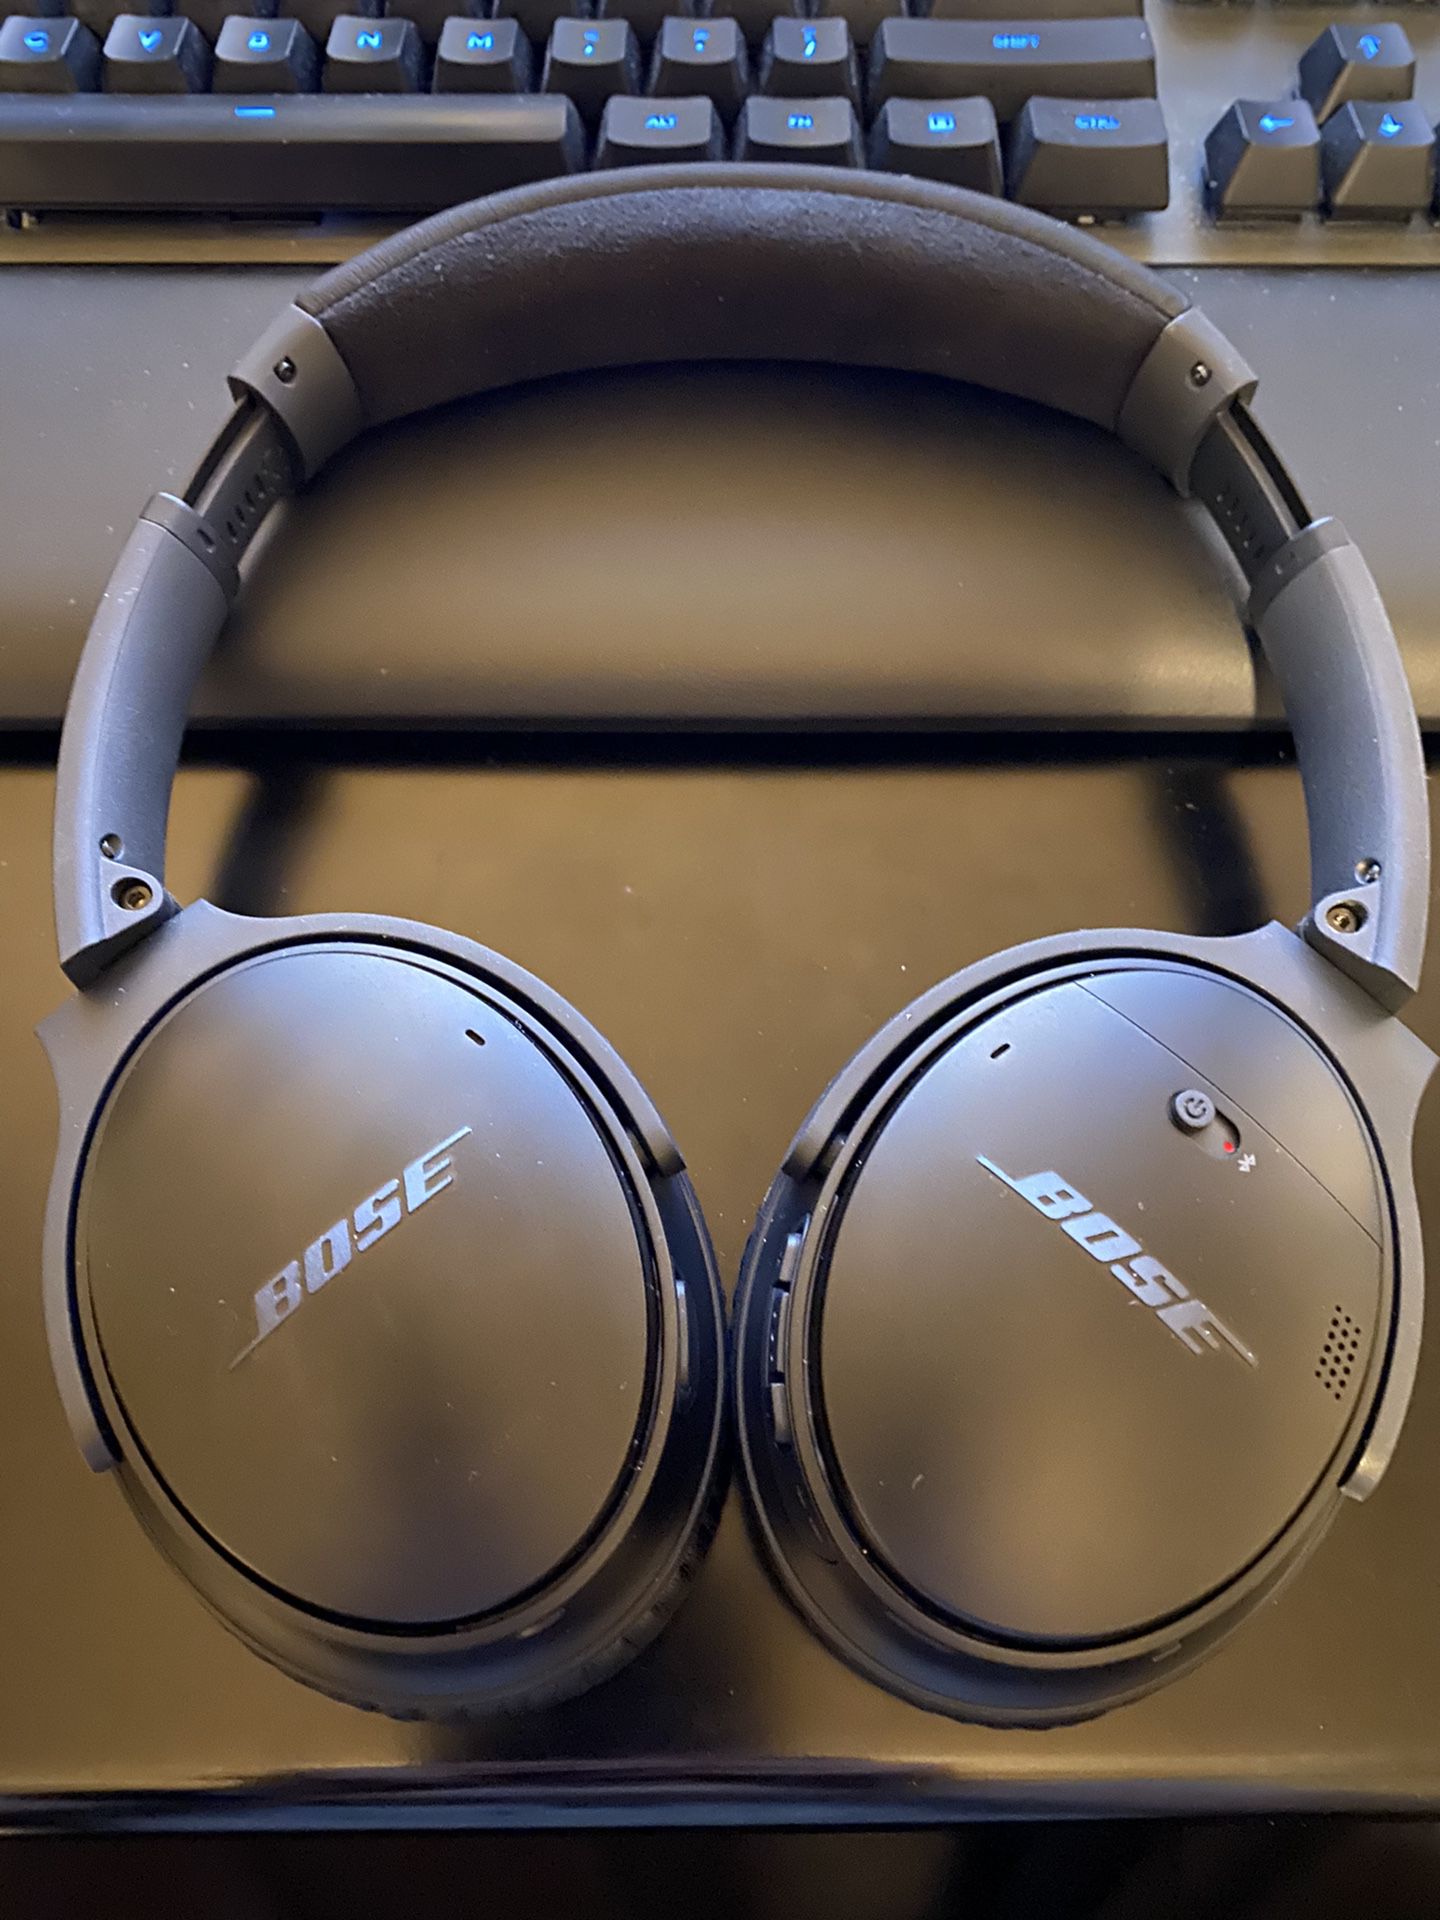 Bose QuietComfort 35 noise cancelling headphones